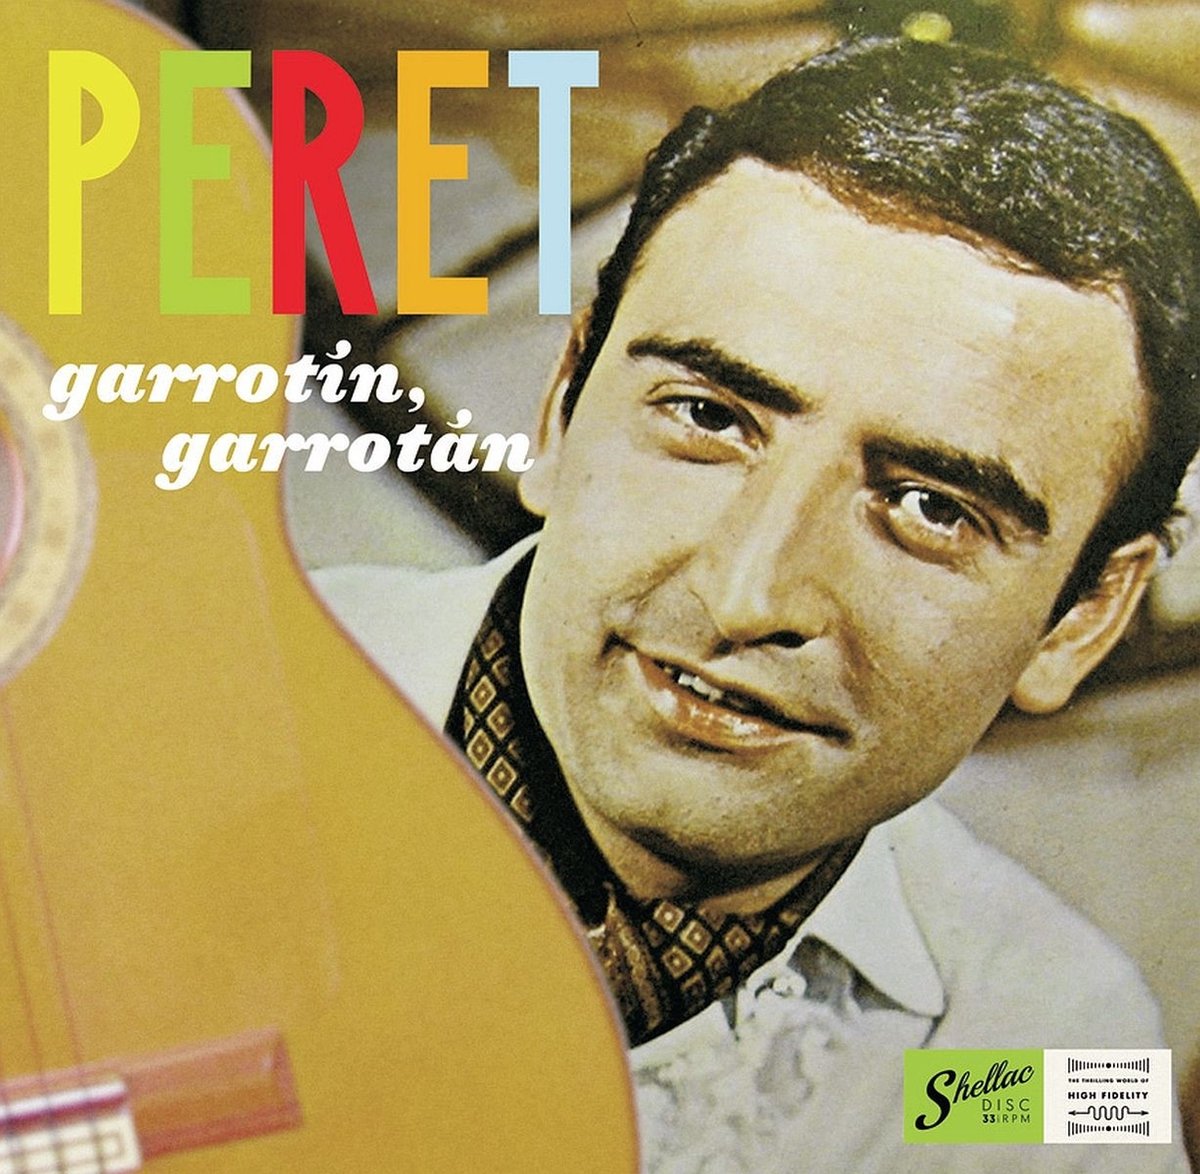 Peret - Garrotin, Garrotan (LP) - Peret